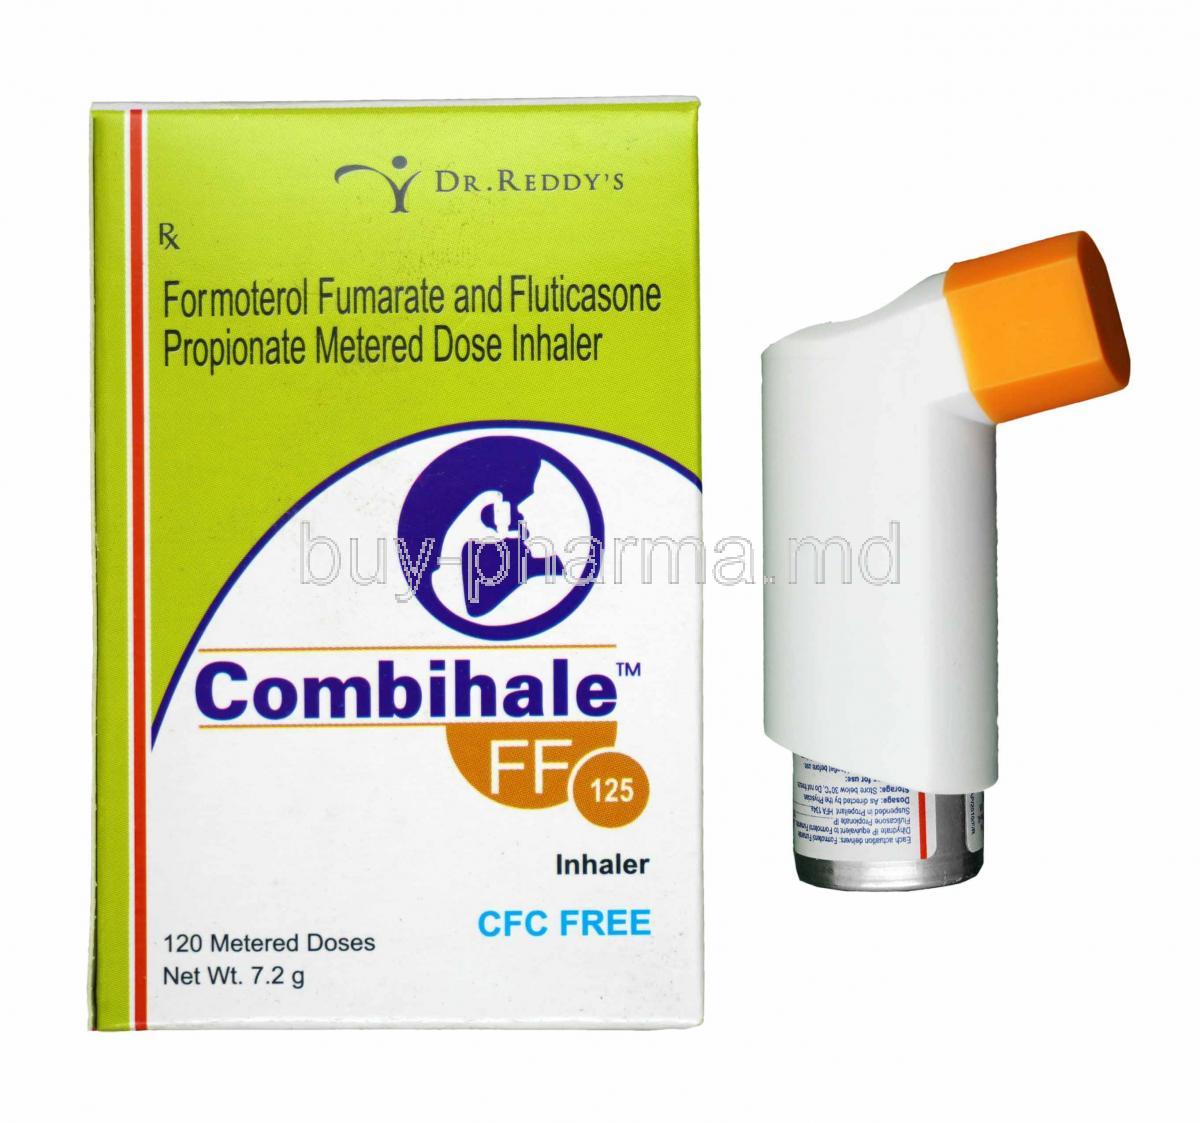 Combihale FF Inhaler, Formoterol 6mcg and Fluticasone Propionate 125mcg box and inhaler